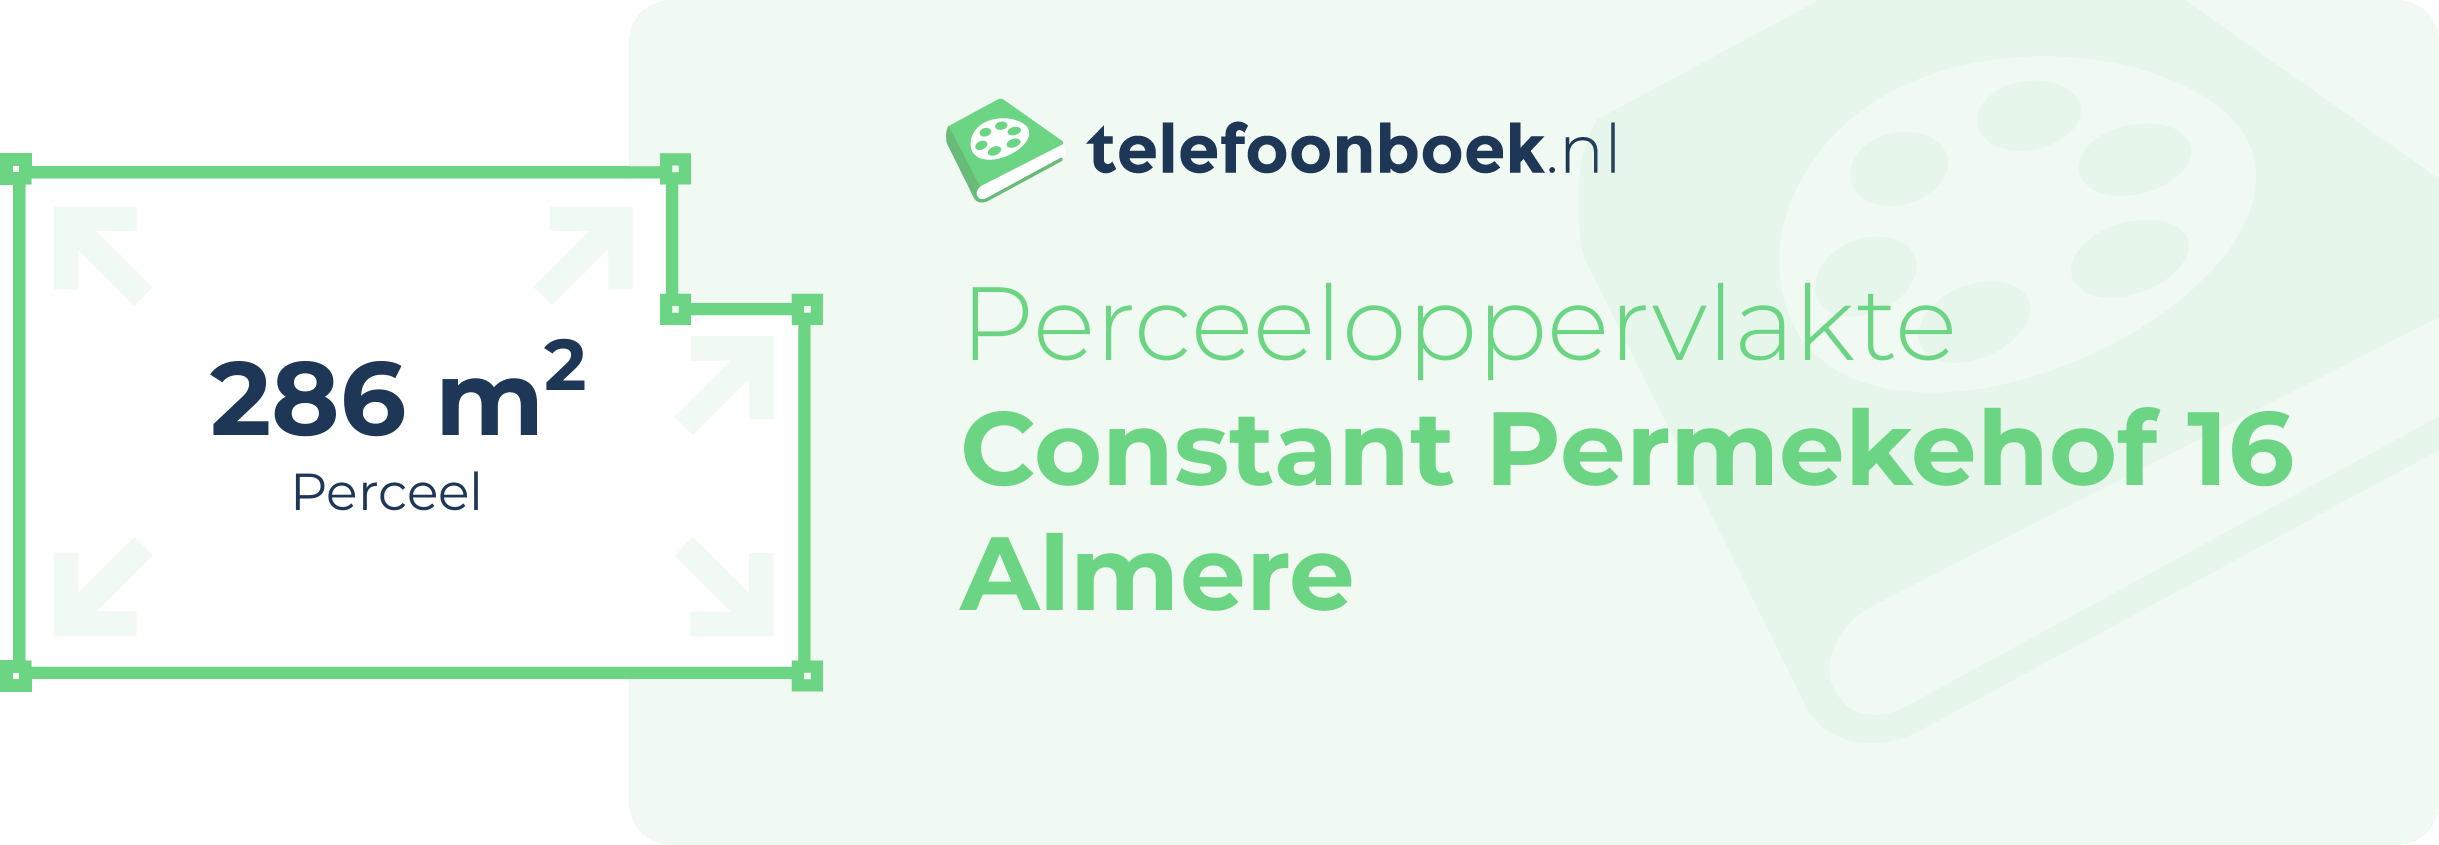 Perceeloppervlakte Constant Permekehof 16 Almere